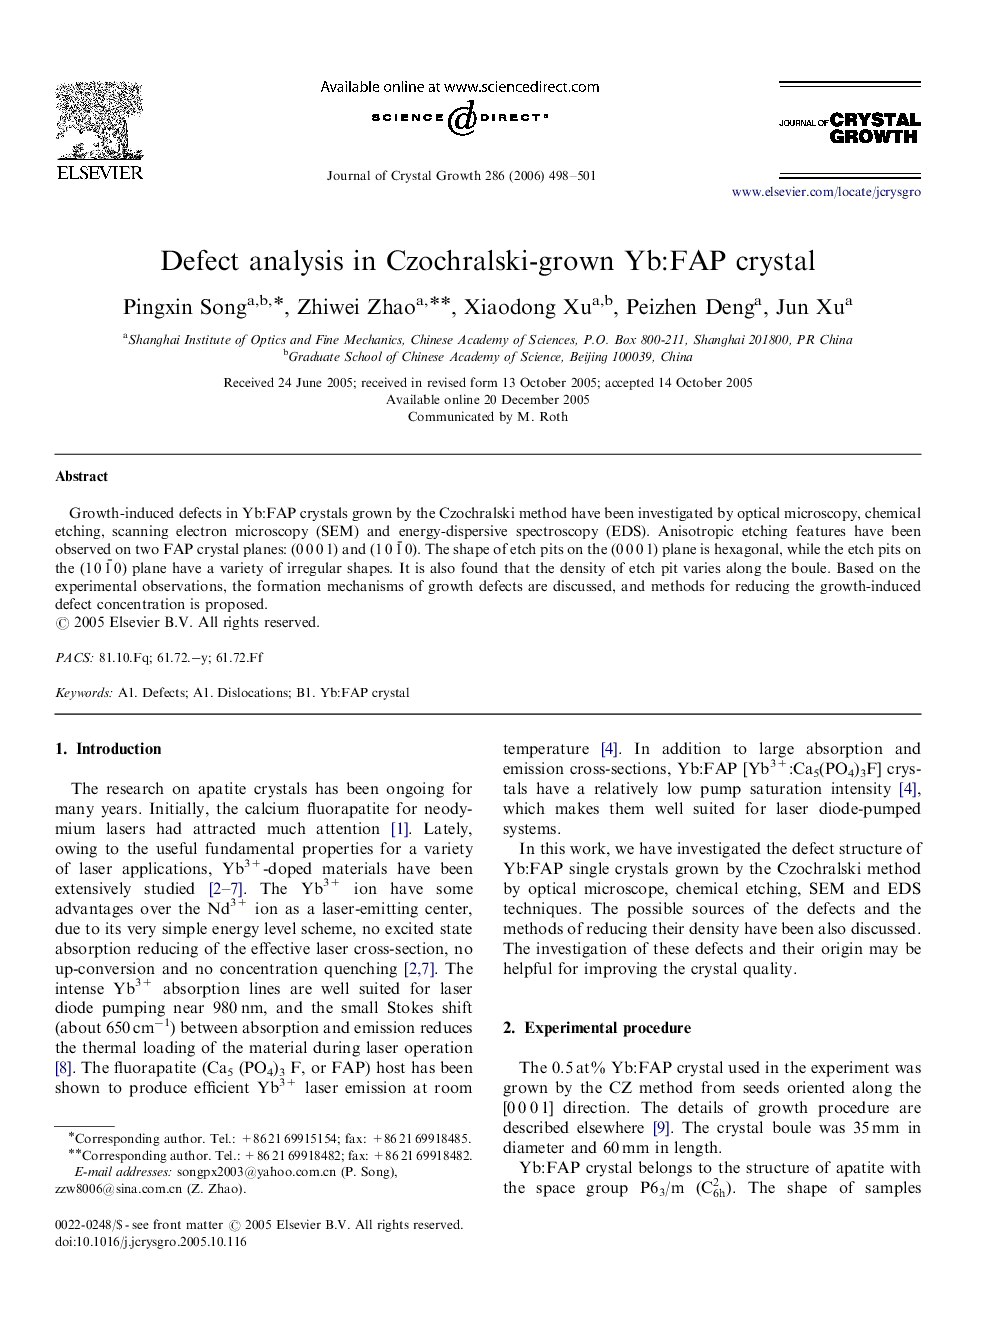 Defect analysis in Czochralski-grown Yb:FAP crystal